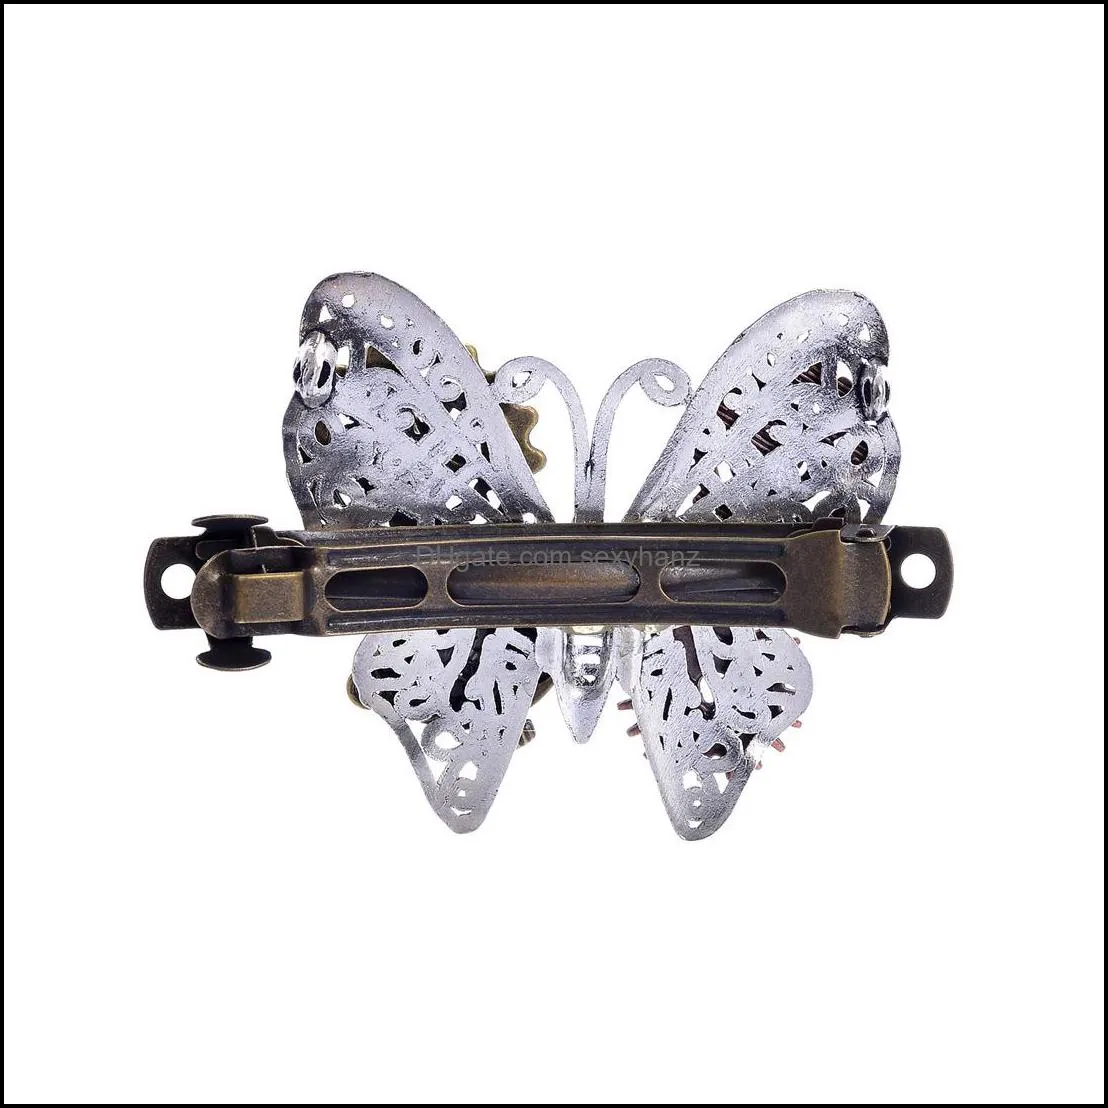 S874 Hot Fashion Jewelry Women`s Vintage Butterfly Barrette Steampunk Gear Alloy Butterfly Hairpin Hair Clip Bobby Pin Lady Barrette